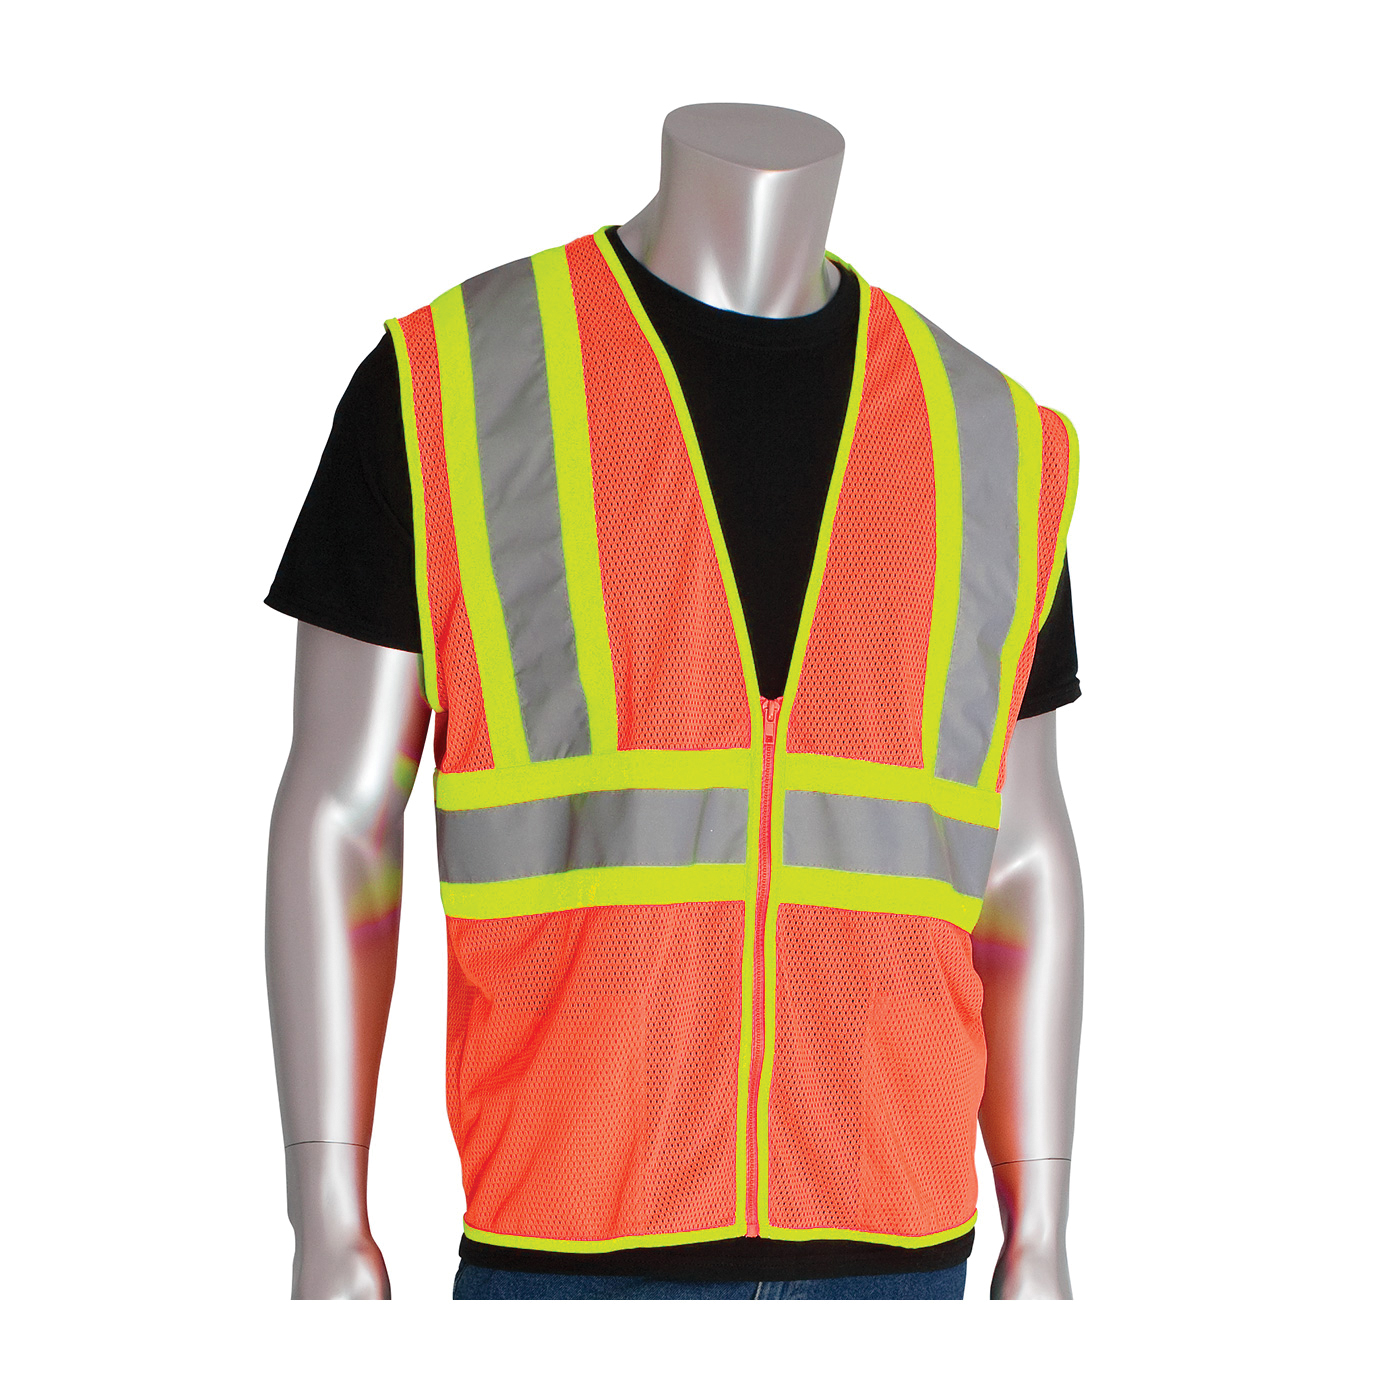 PIP® 302-MVOR-XL 2-Tone Safety Vest, XL, Hi-Viz Orange, Polyester Mesh, Zipper Closure, 2 Pockets, ANSI Class: Class 2, Specifications Met: ANSI 107 Type R